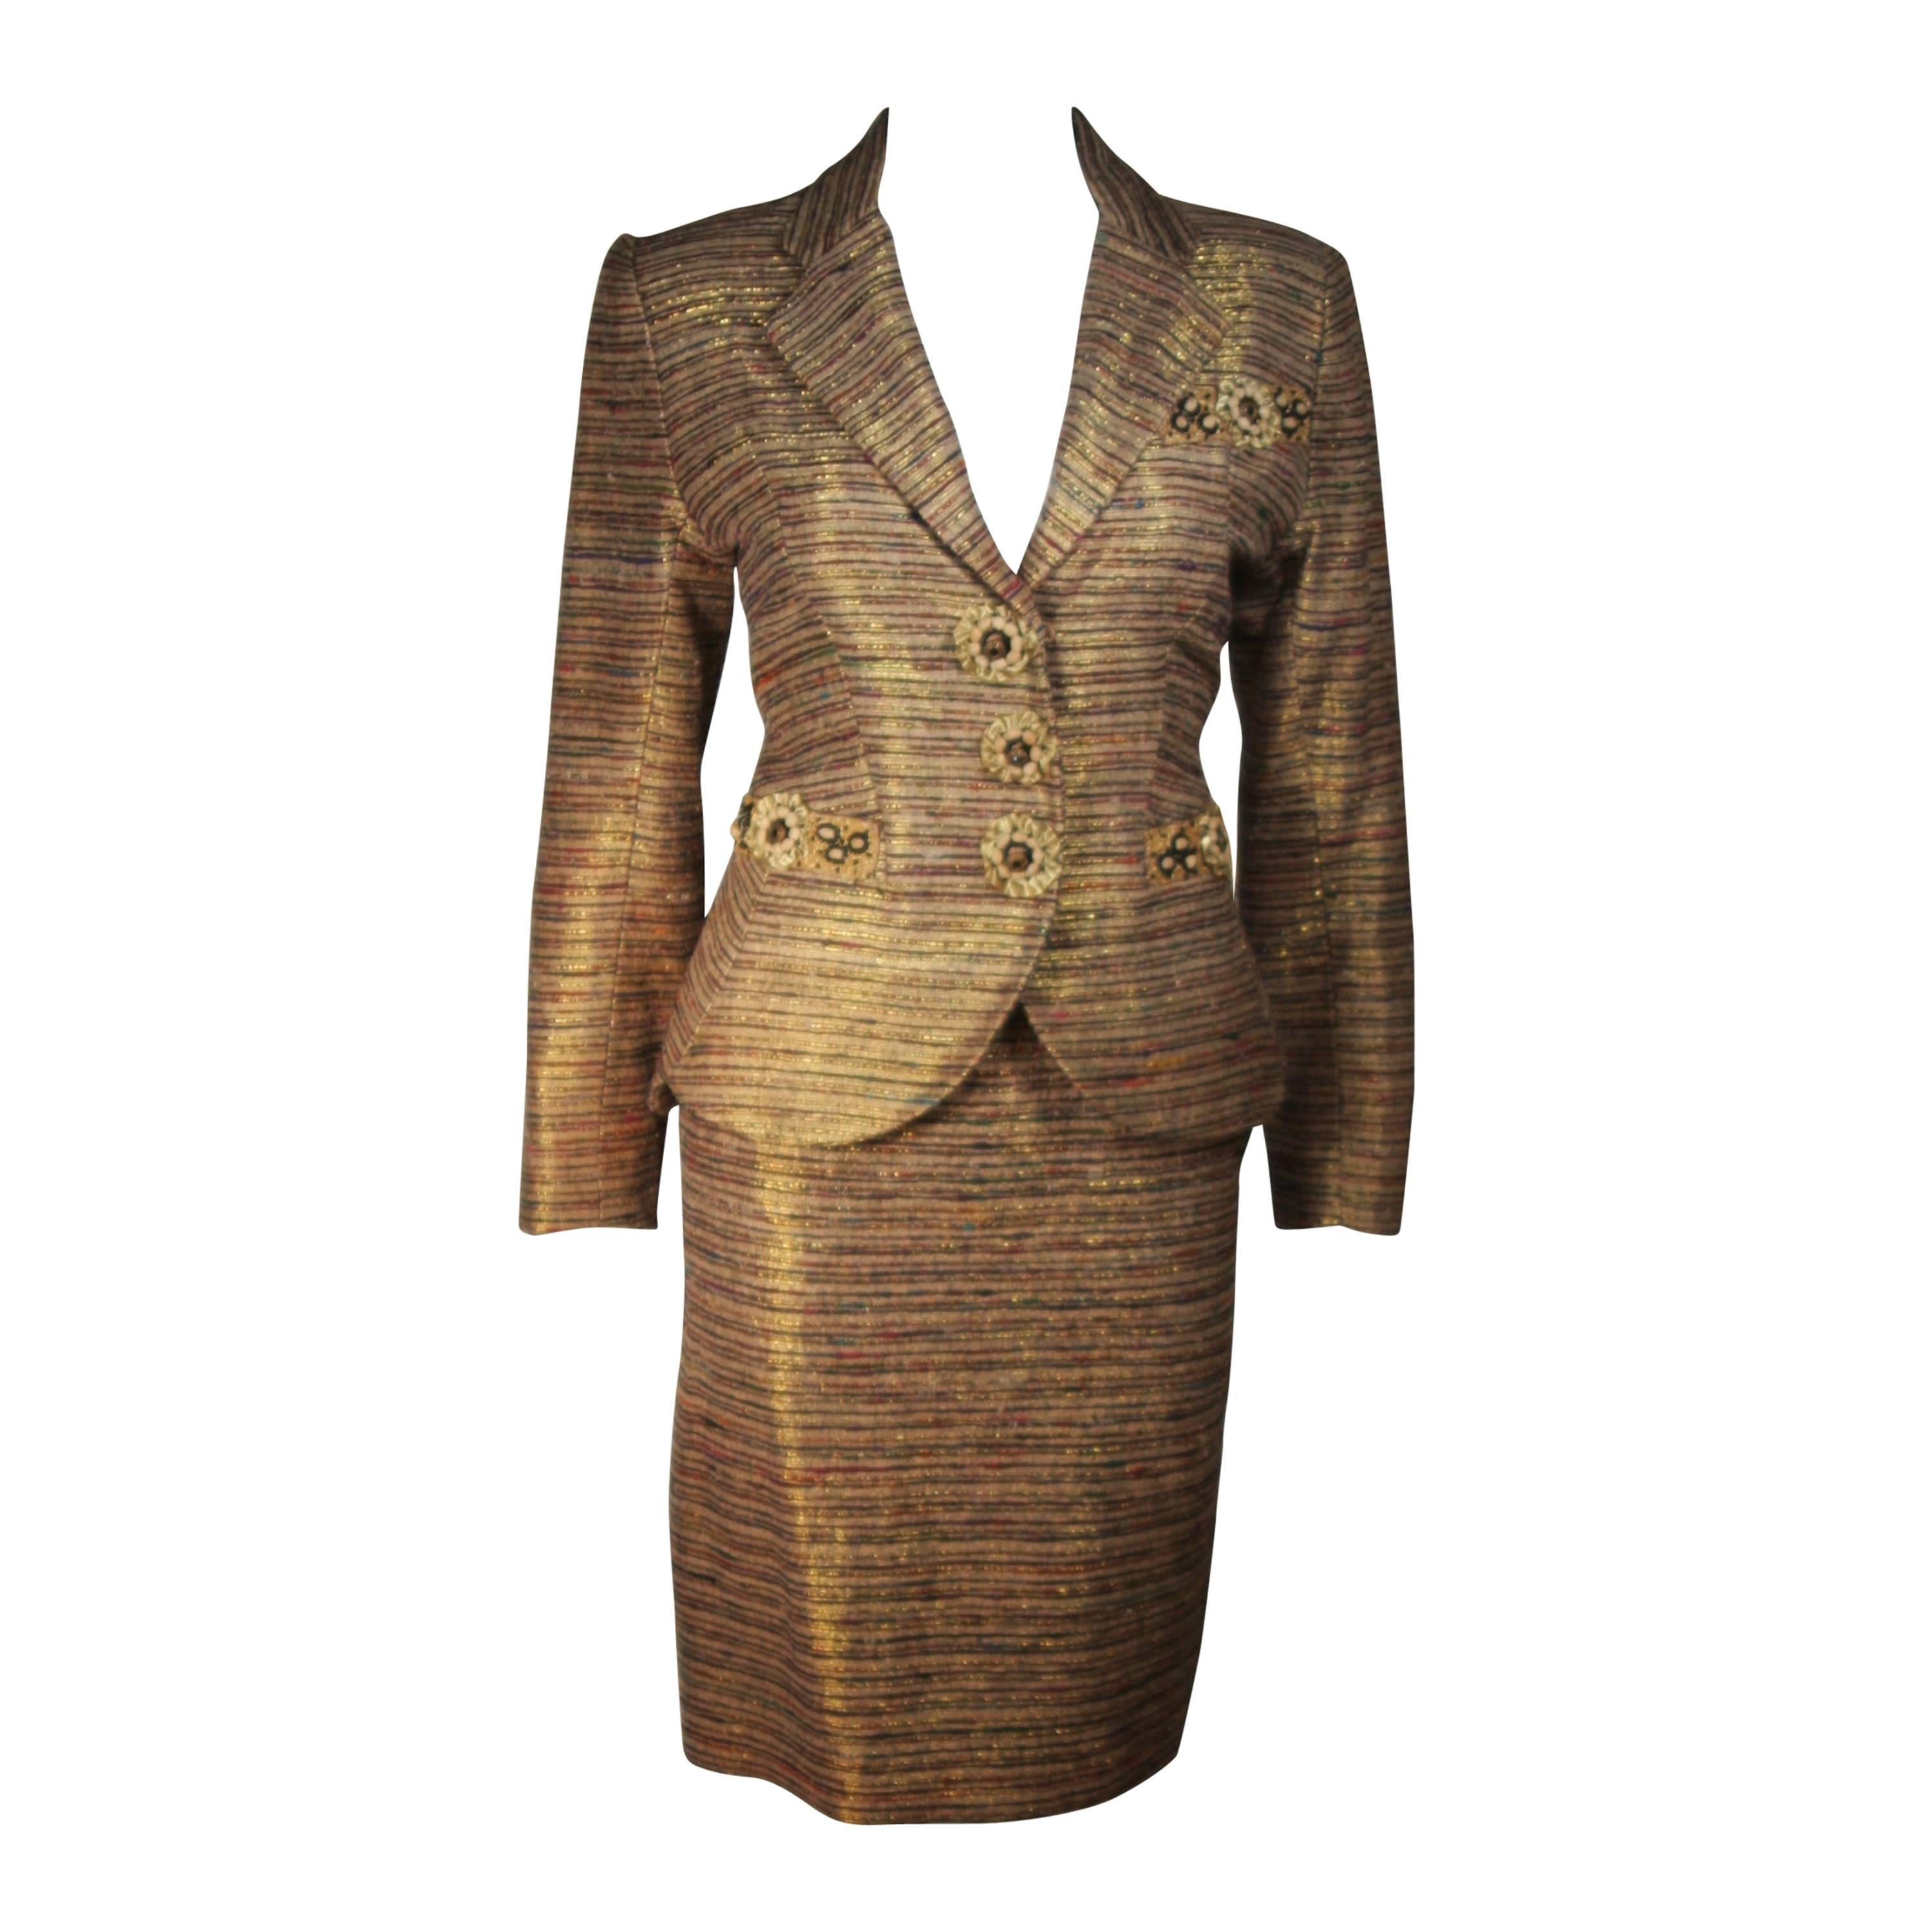 ZANDRA RHODES Metallic Raw Silk Skirt Suit with Applique Size 8